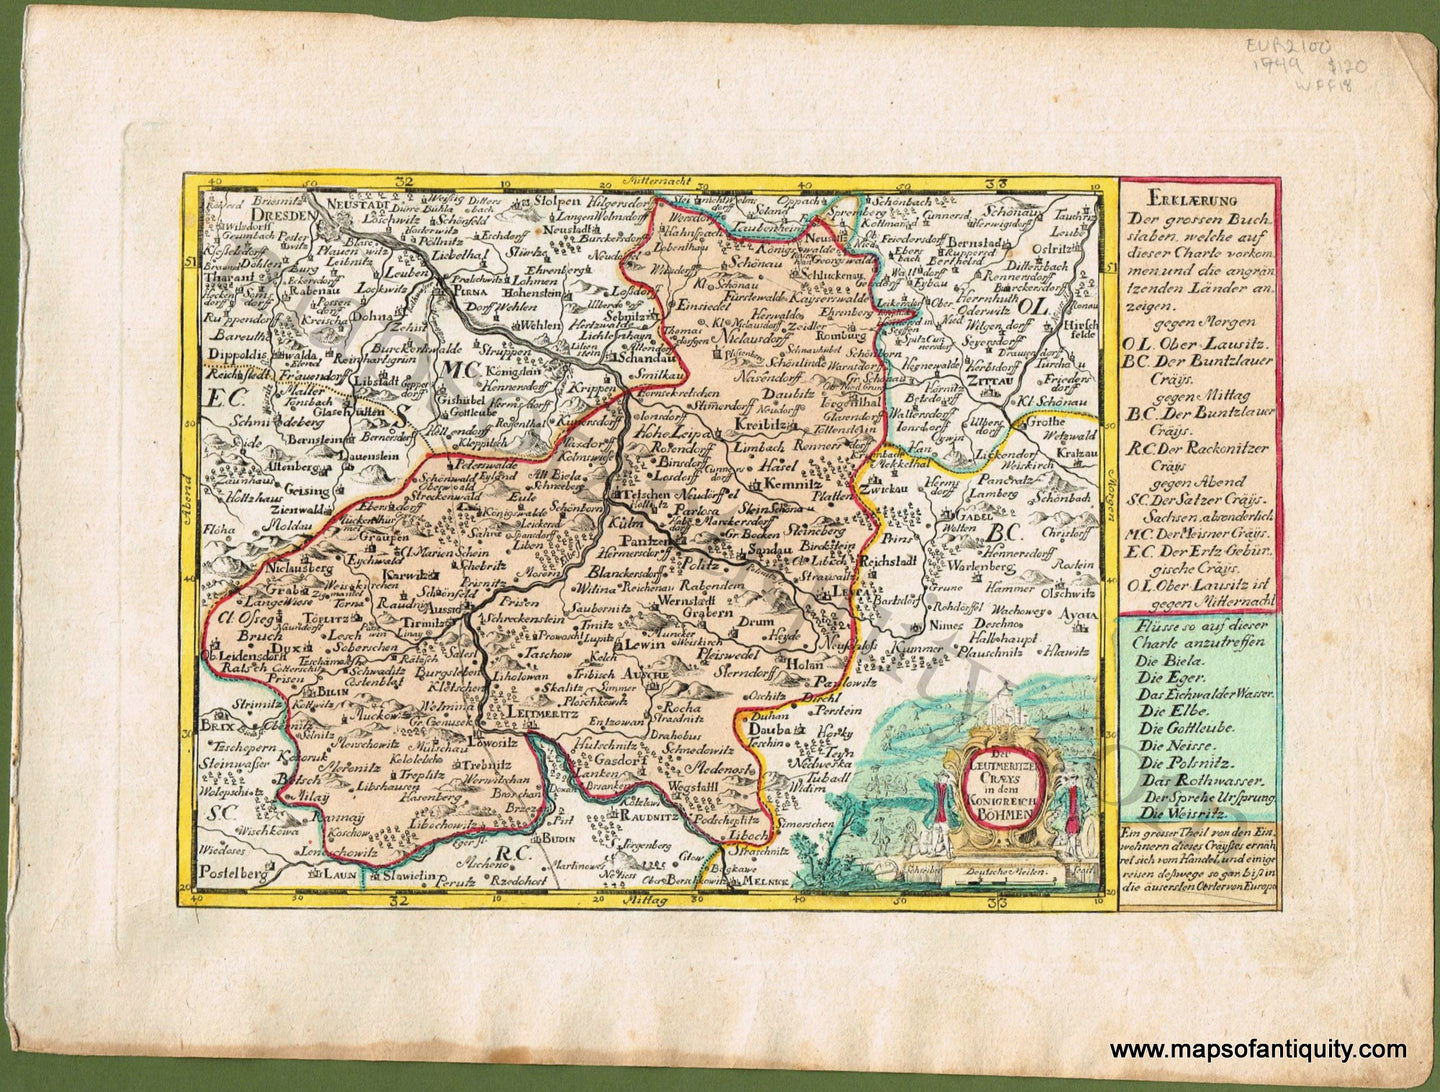 Antique-Hand-Colored-Map-Der-Leutmeritzer-Craeys-in-dem-Konigreich-Bohmen-(Part-of-the-Czech-Republic)-Europe-Czechoslovakia-1749-John-George-Schreibern-Maps-Of-Antiquity